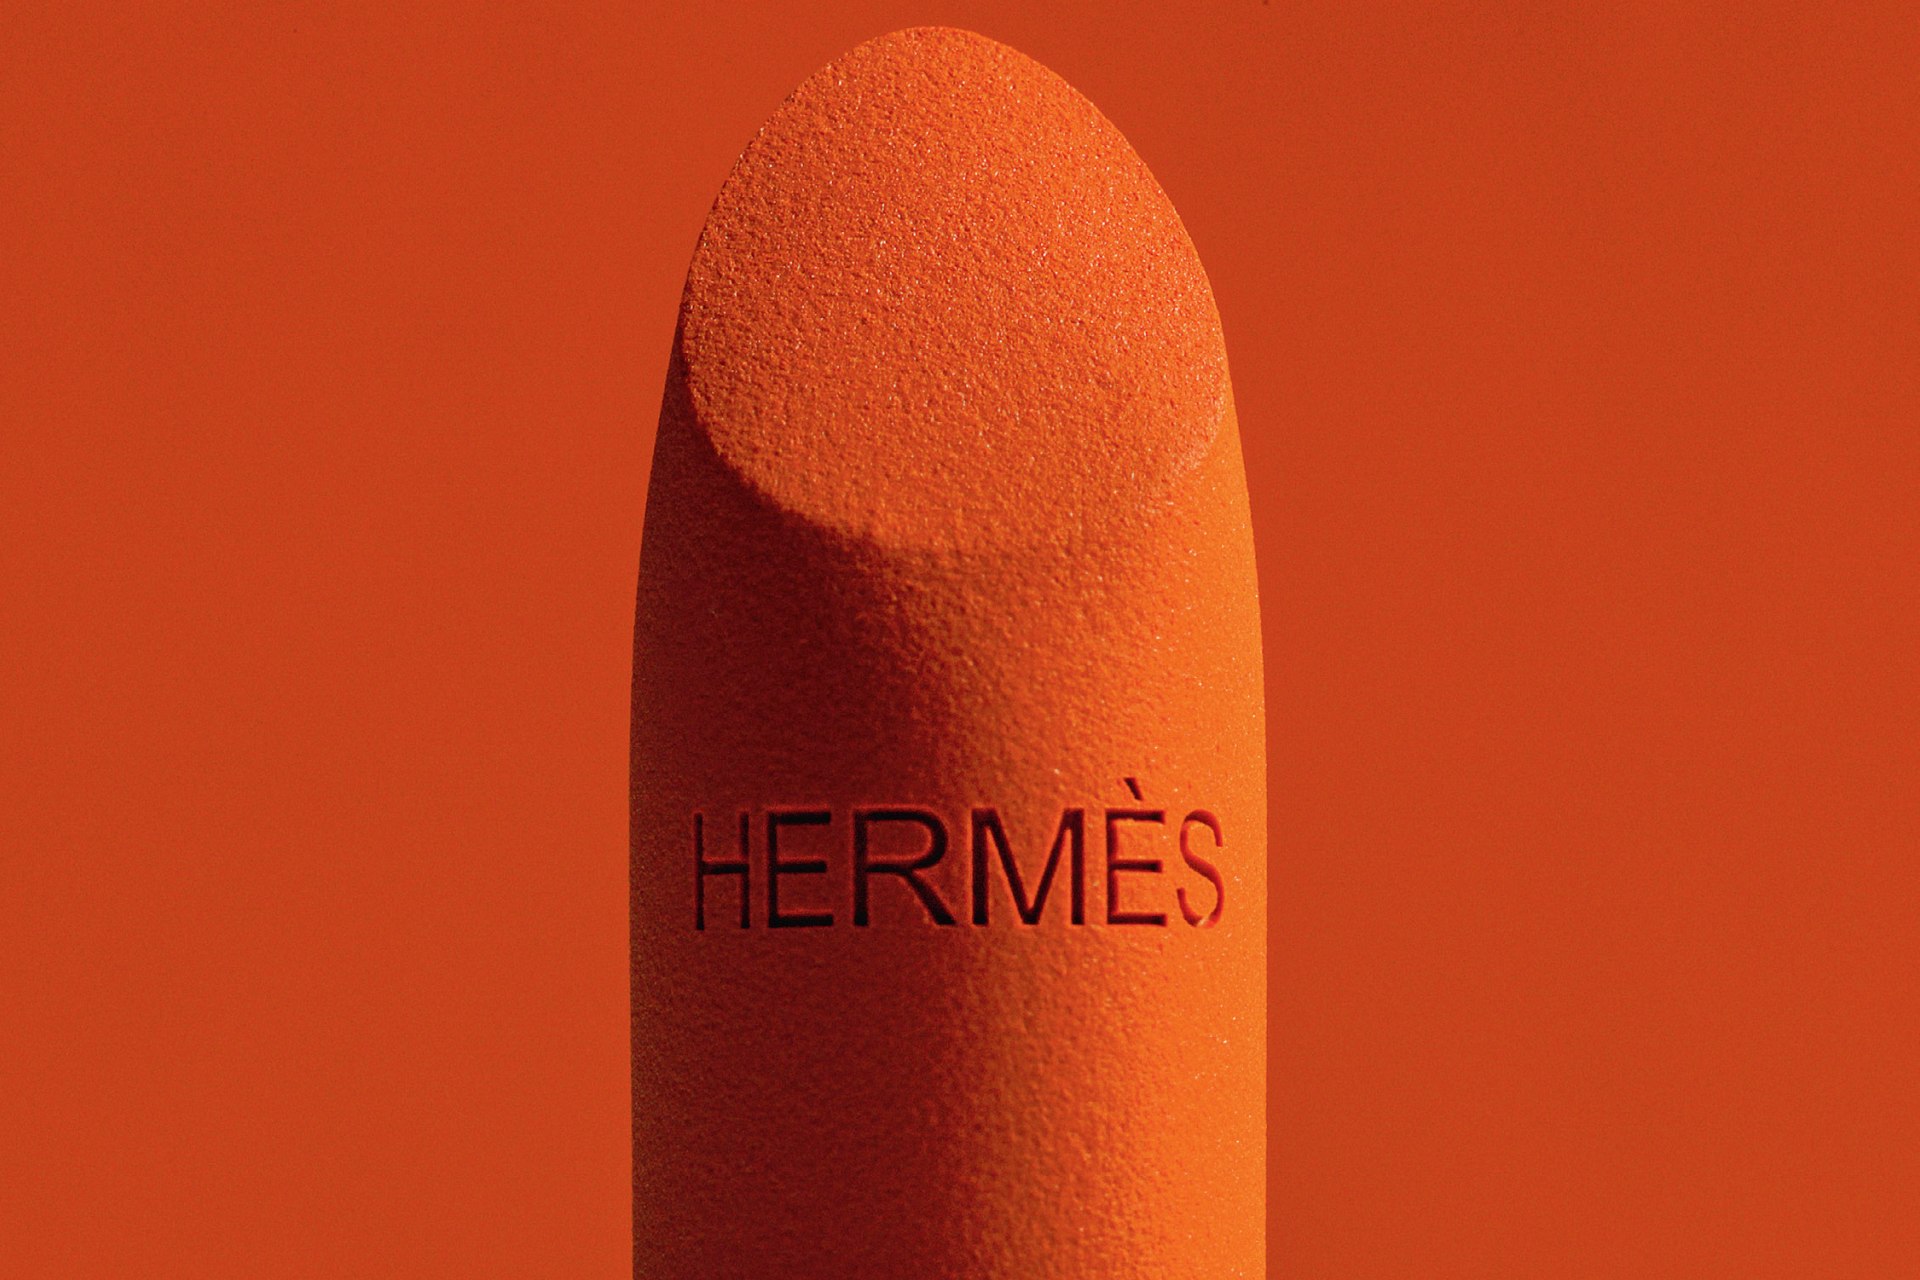 Hermès Beauté Debuts with 24 Lipsticks